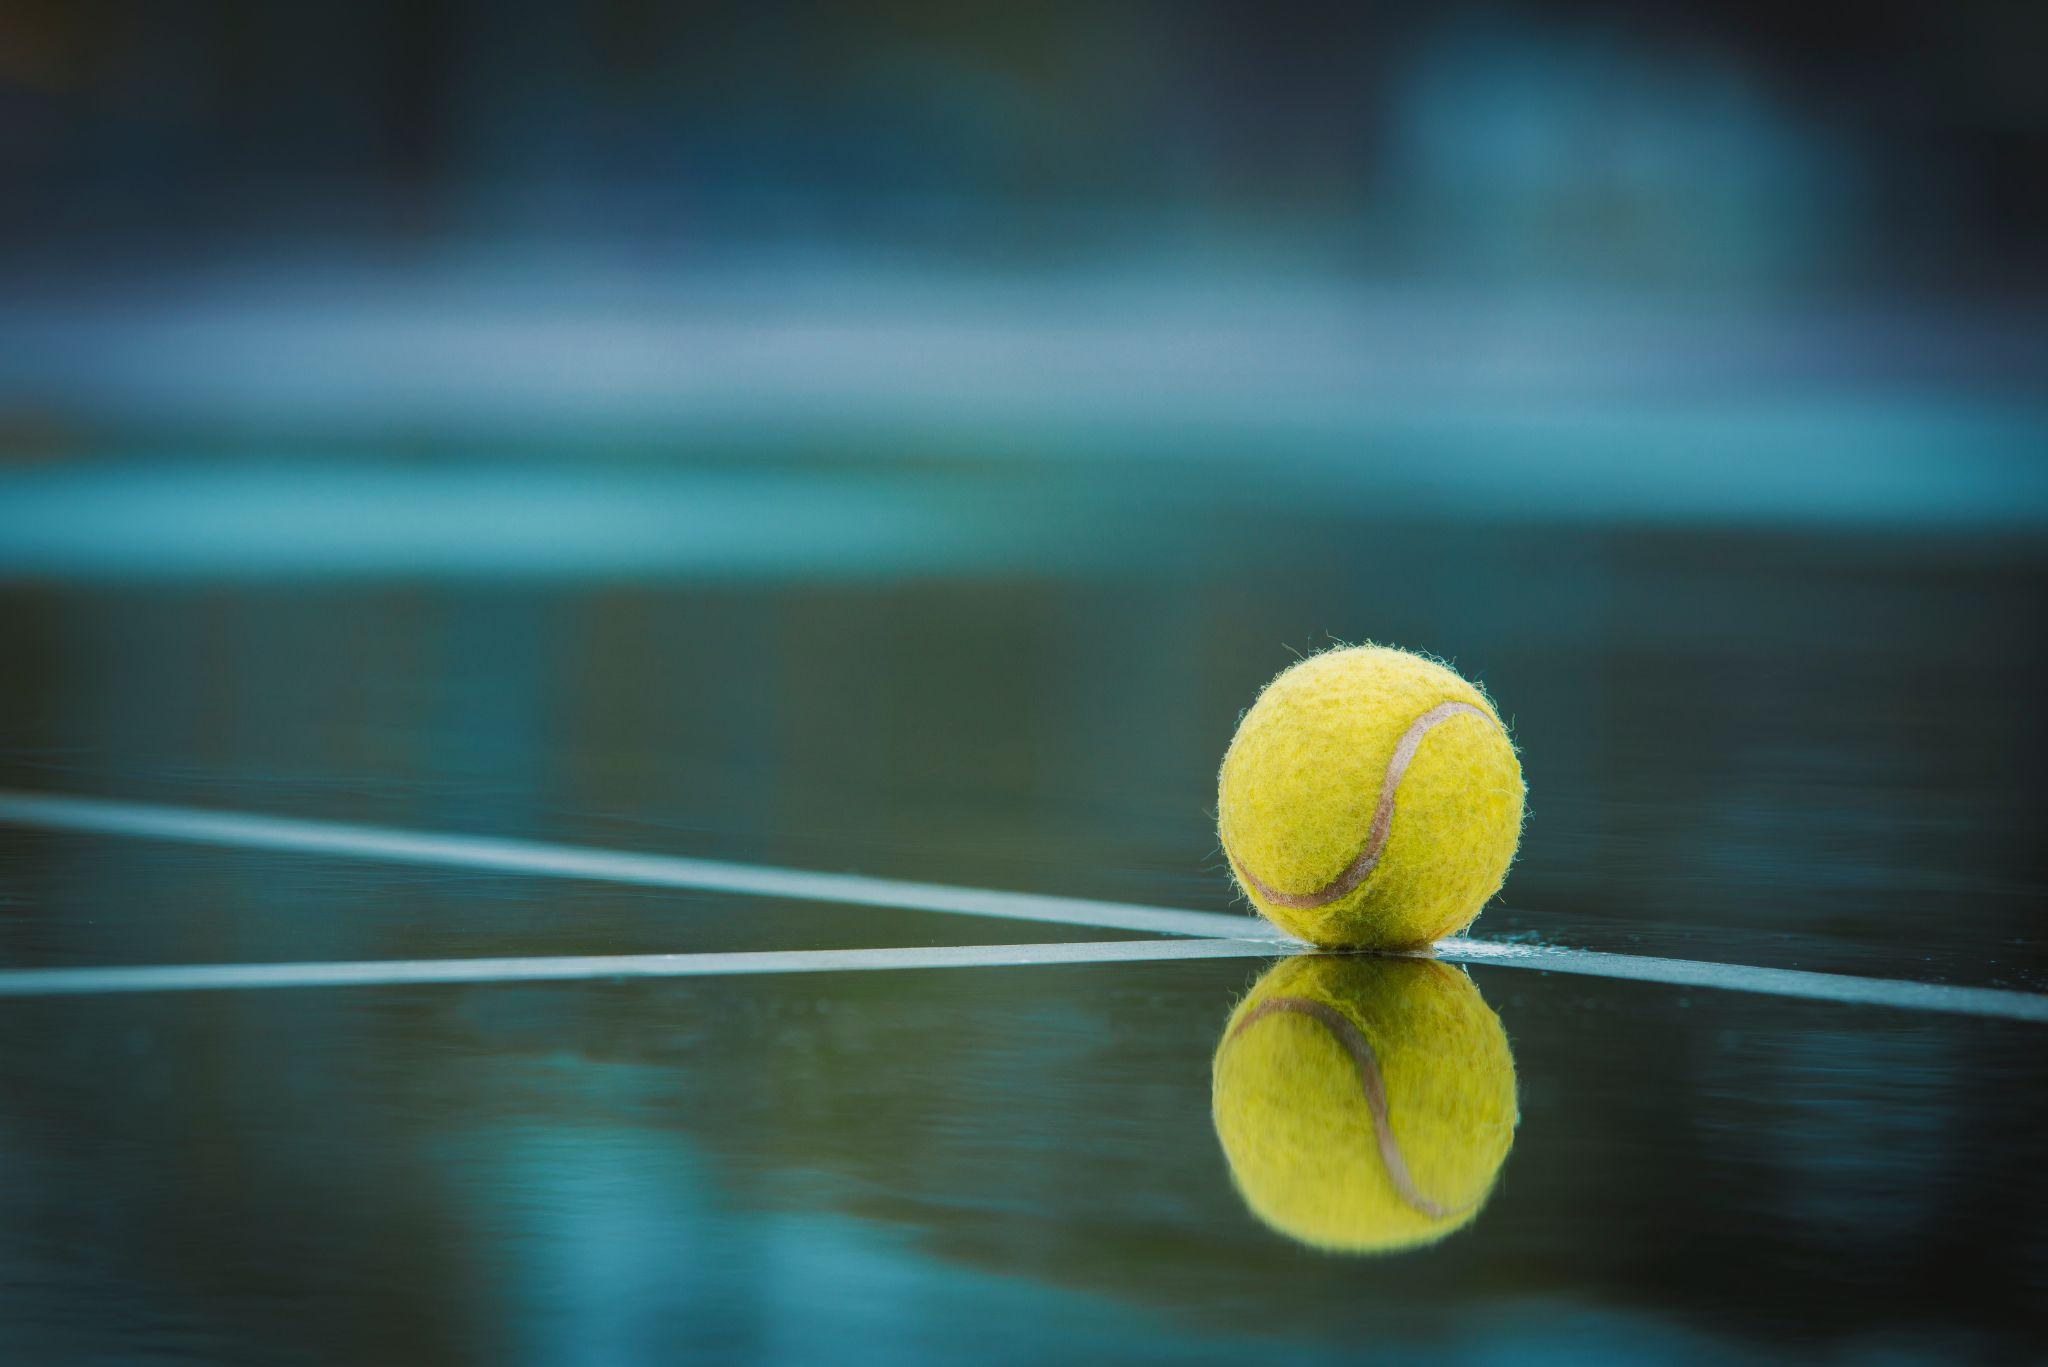 Tennis ball in a blue hardcourt 